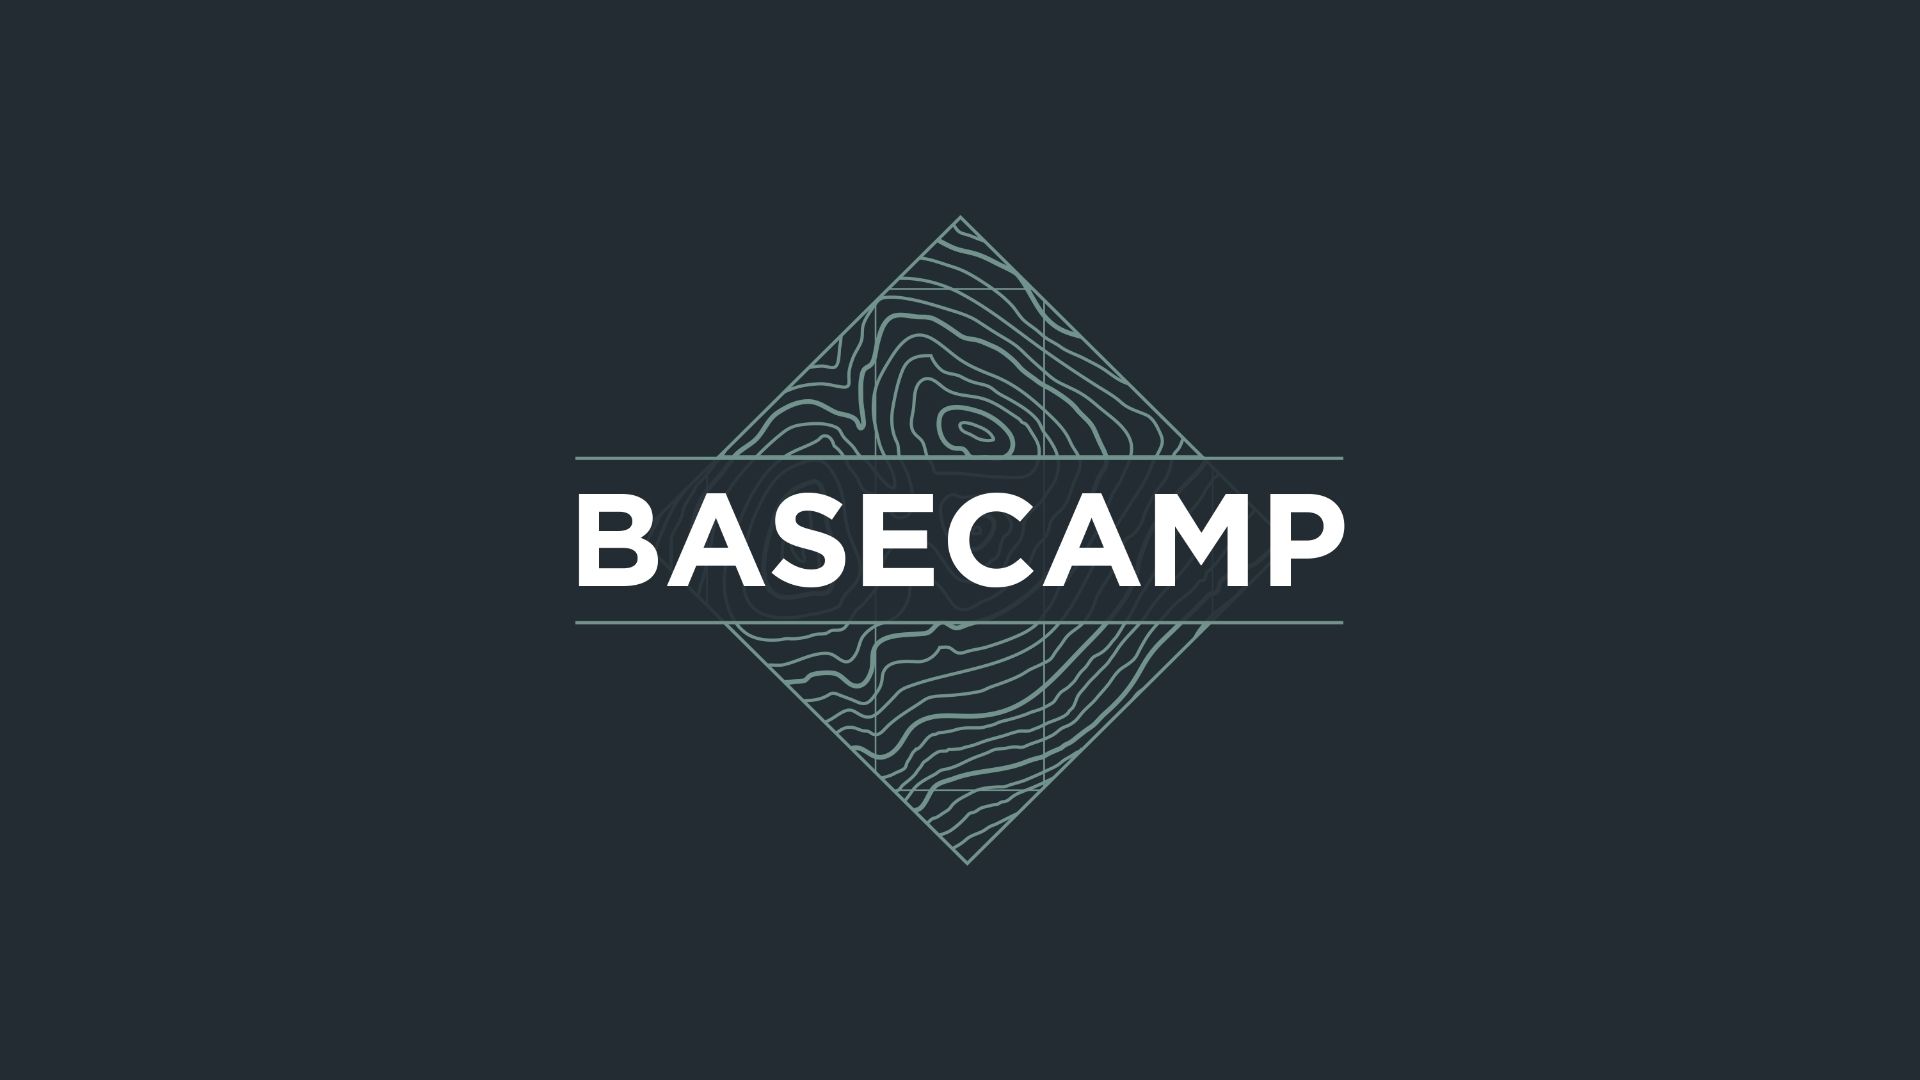 Basecamp_1920x1080 image